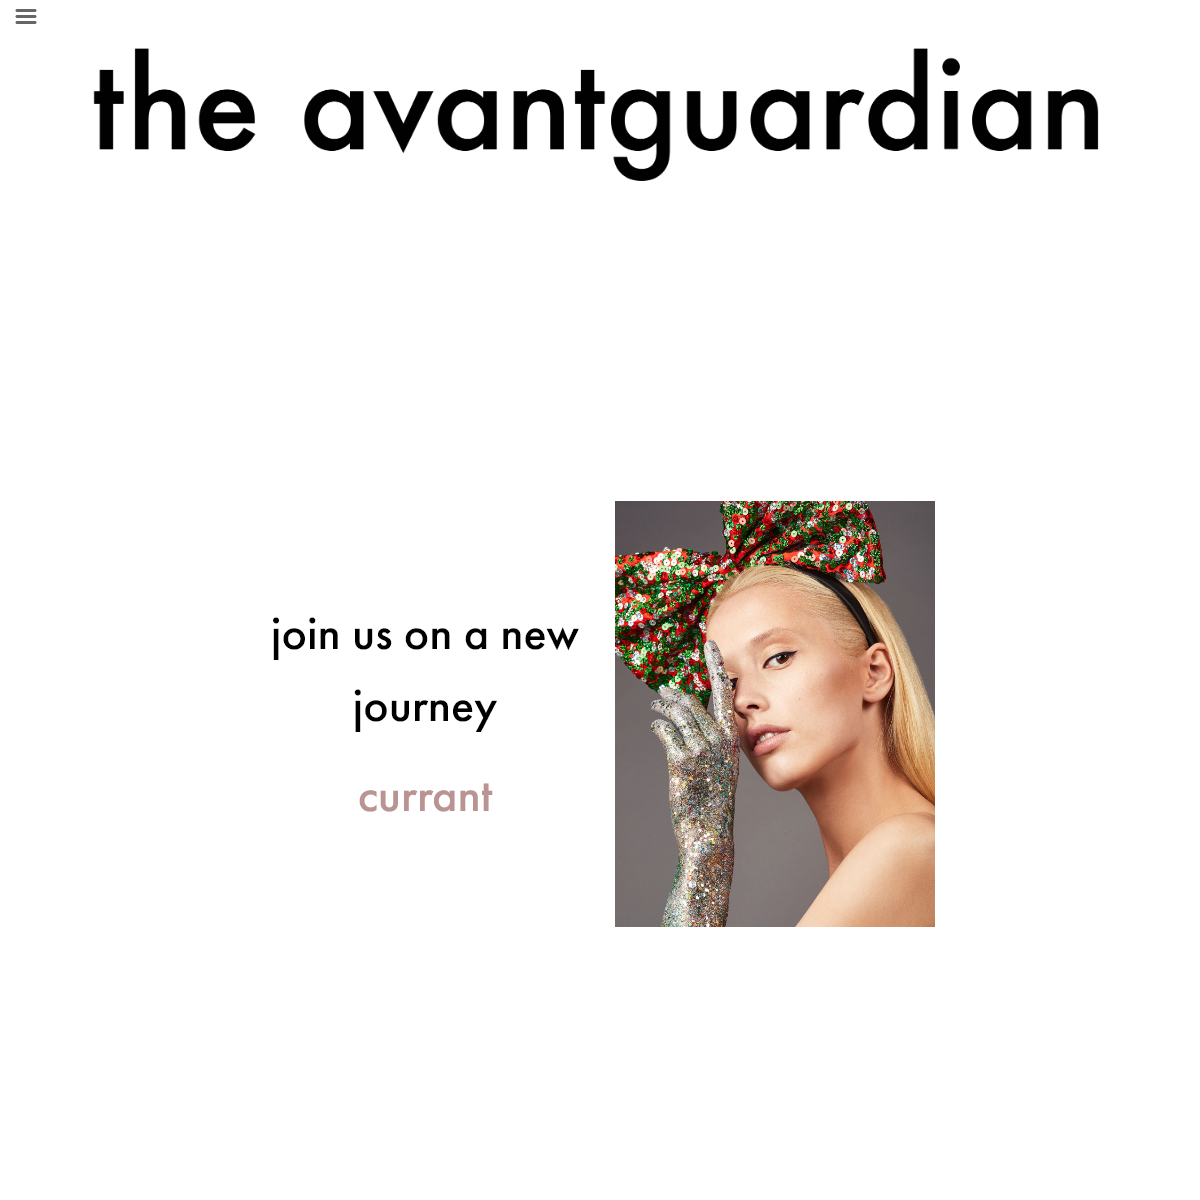 A complete backup of theavantguardian.com